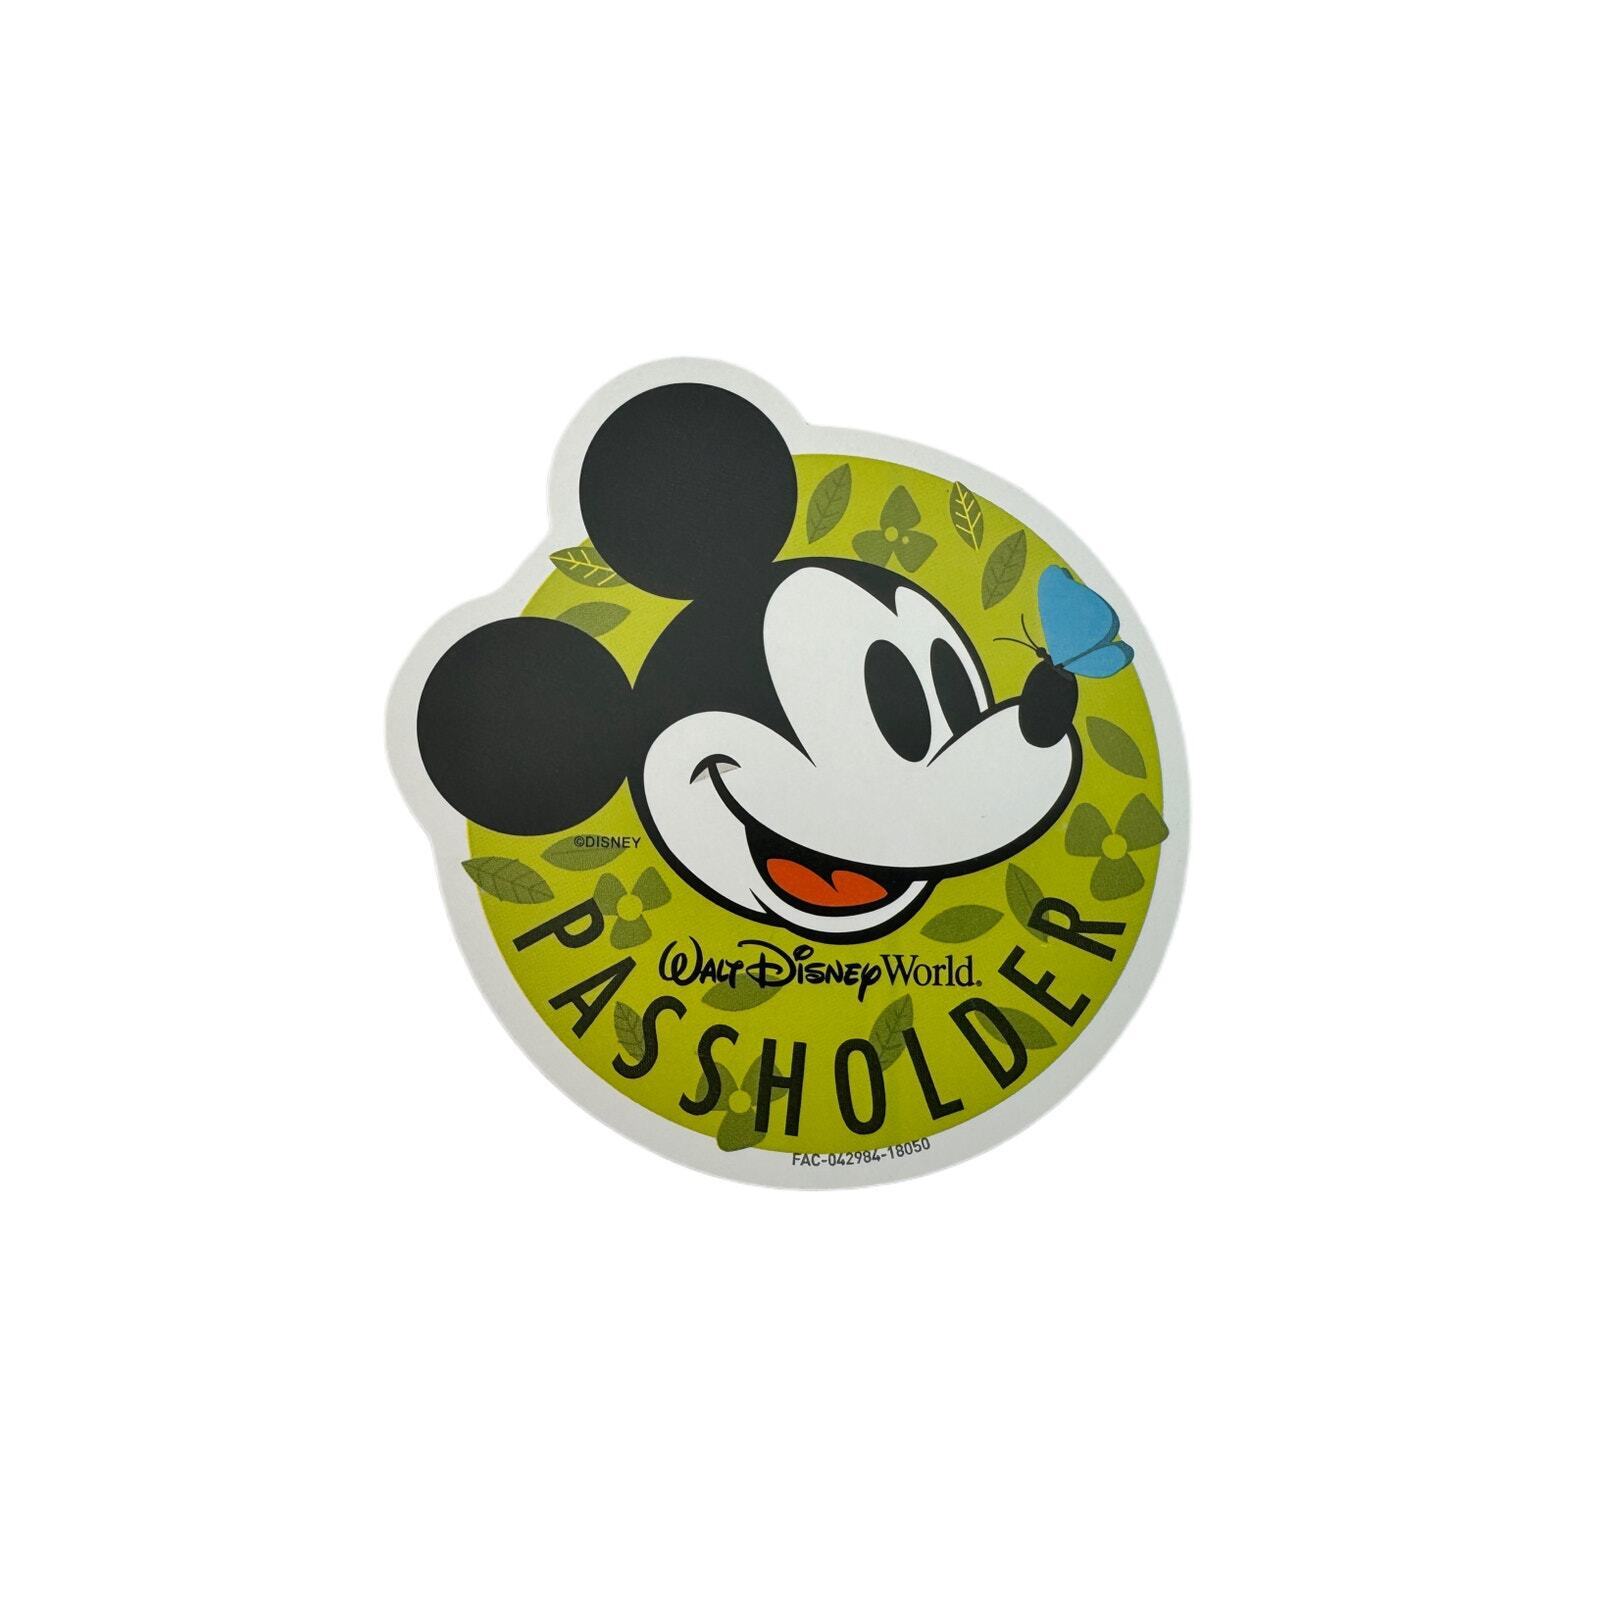 NEW Authentic Disney World 2018 Mickey Flower & Garden Annual Passholder Magnet